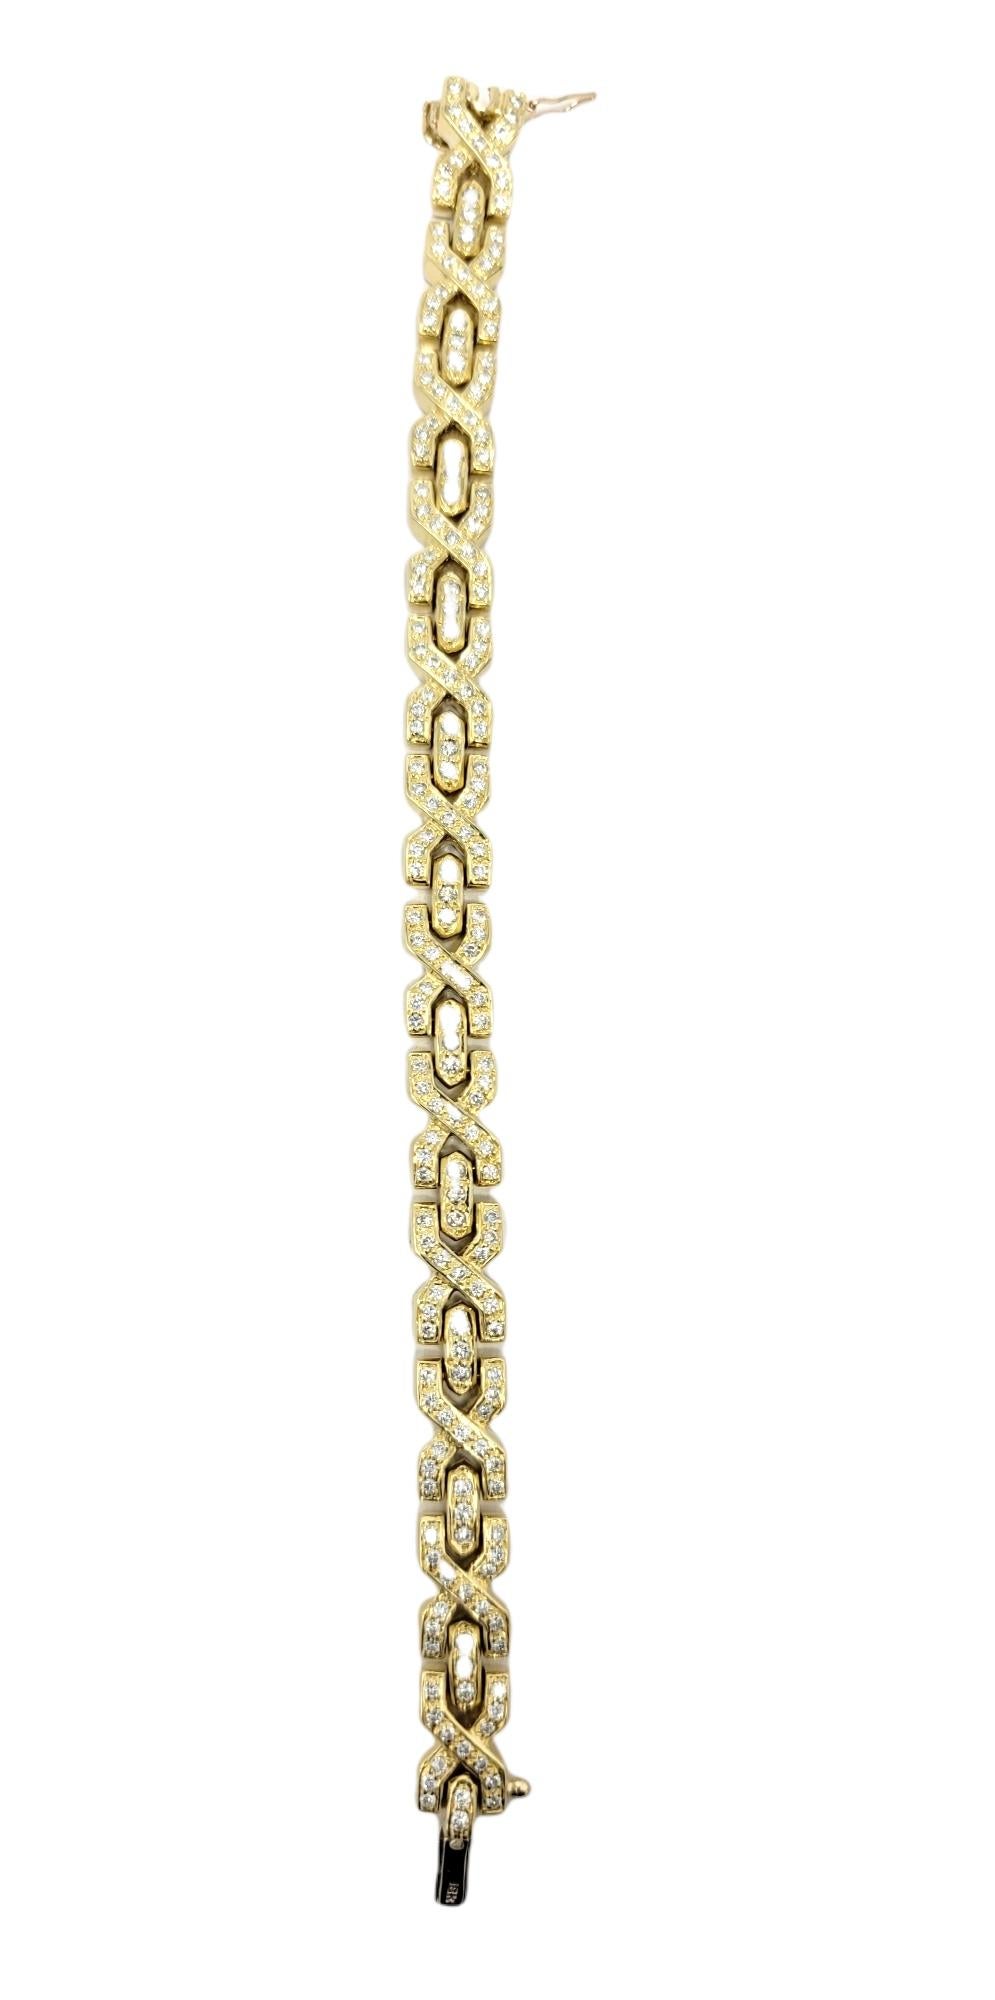 2.25 Carat Natural Round Diamond 'X' Link Bracelet in 18 Karat Yellow Gold For Sale 3